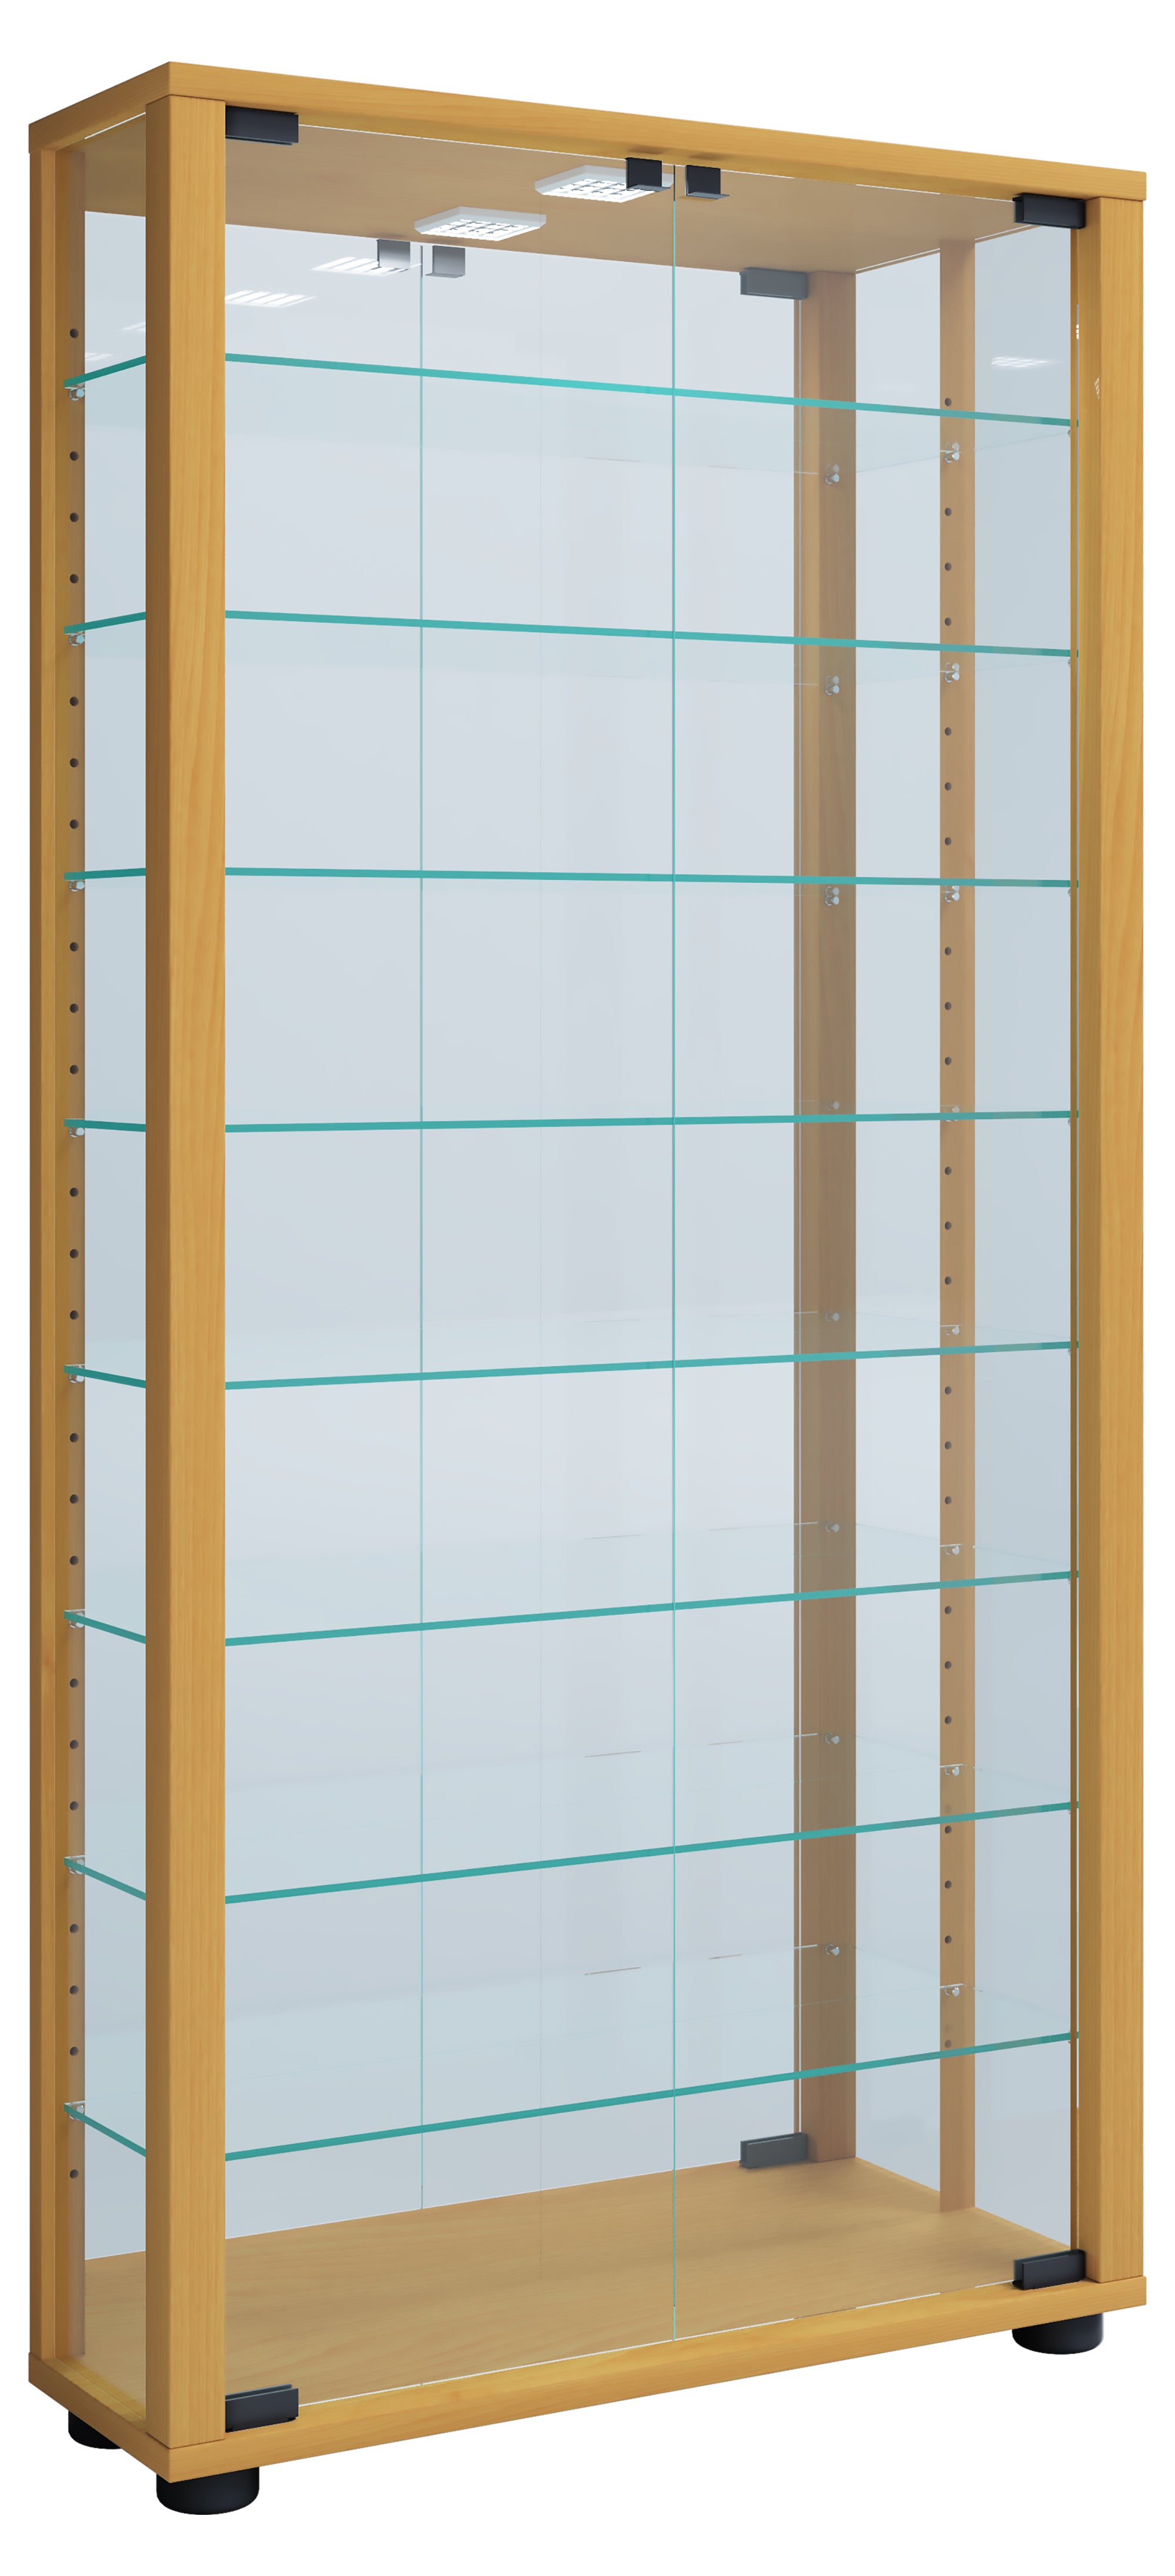 13: Gulv Vitrineskab "Lumo Maxi" Med Spejl | Inkl. Led Lys, 115 x 59 x 18 cm, farve: bøg